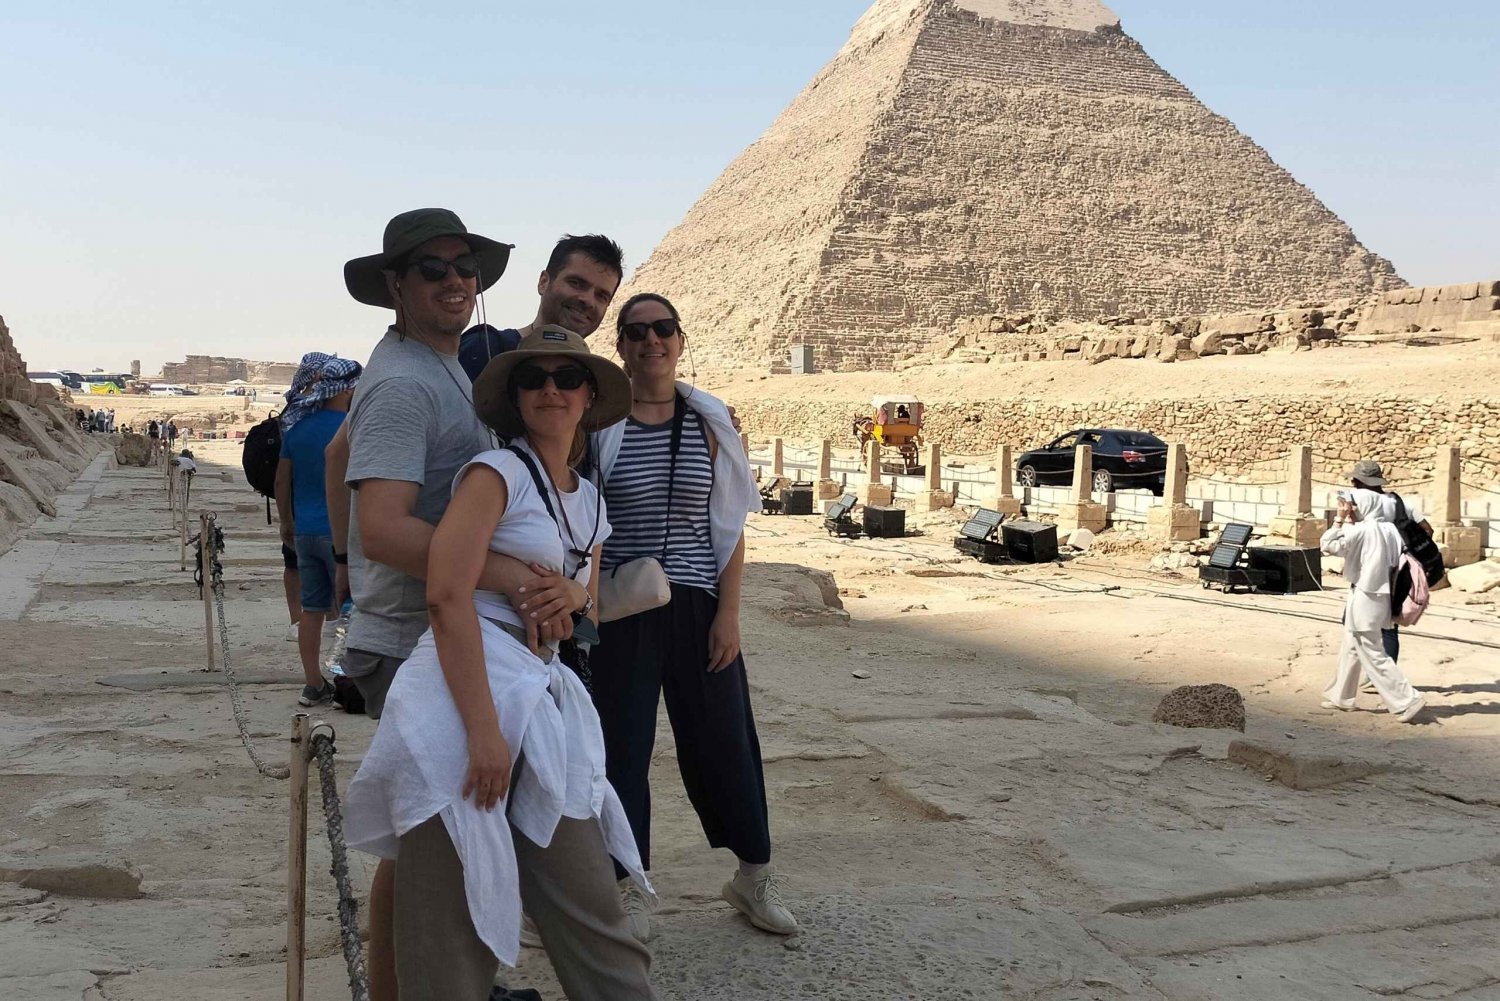 Pyramiderna i Giza, mumiemuseet och basaren - privat dagstur